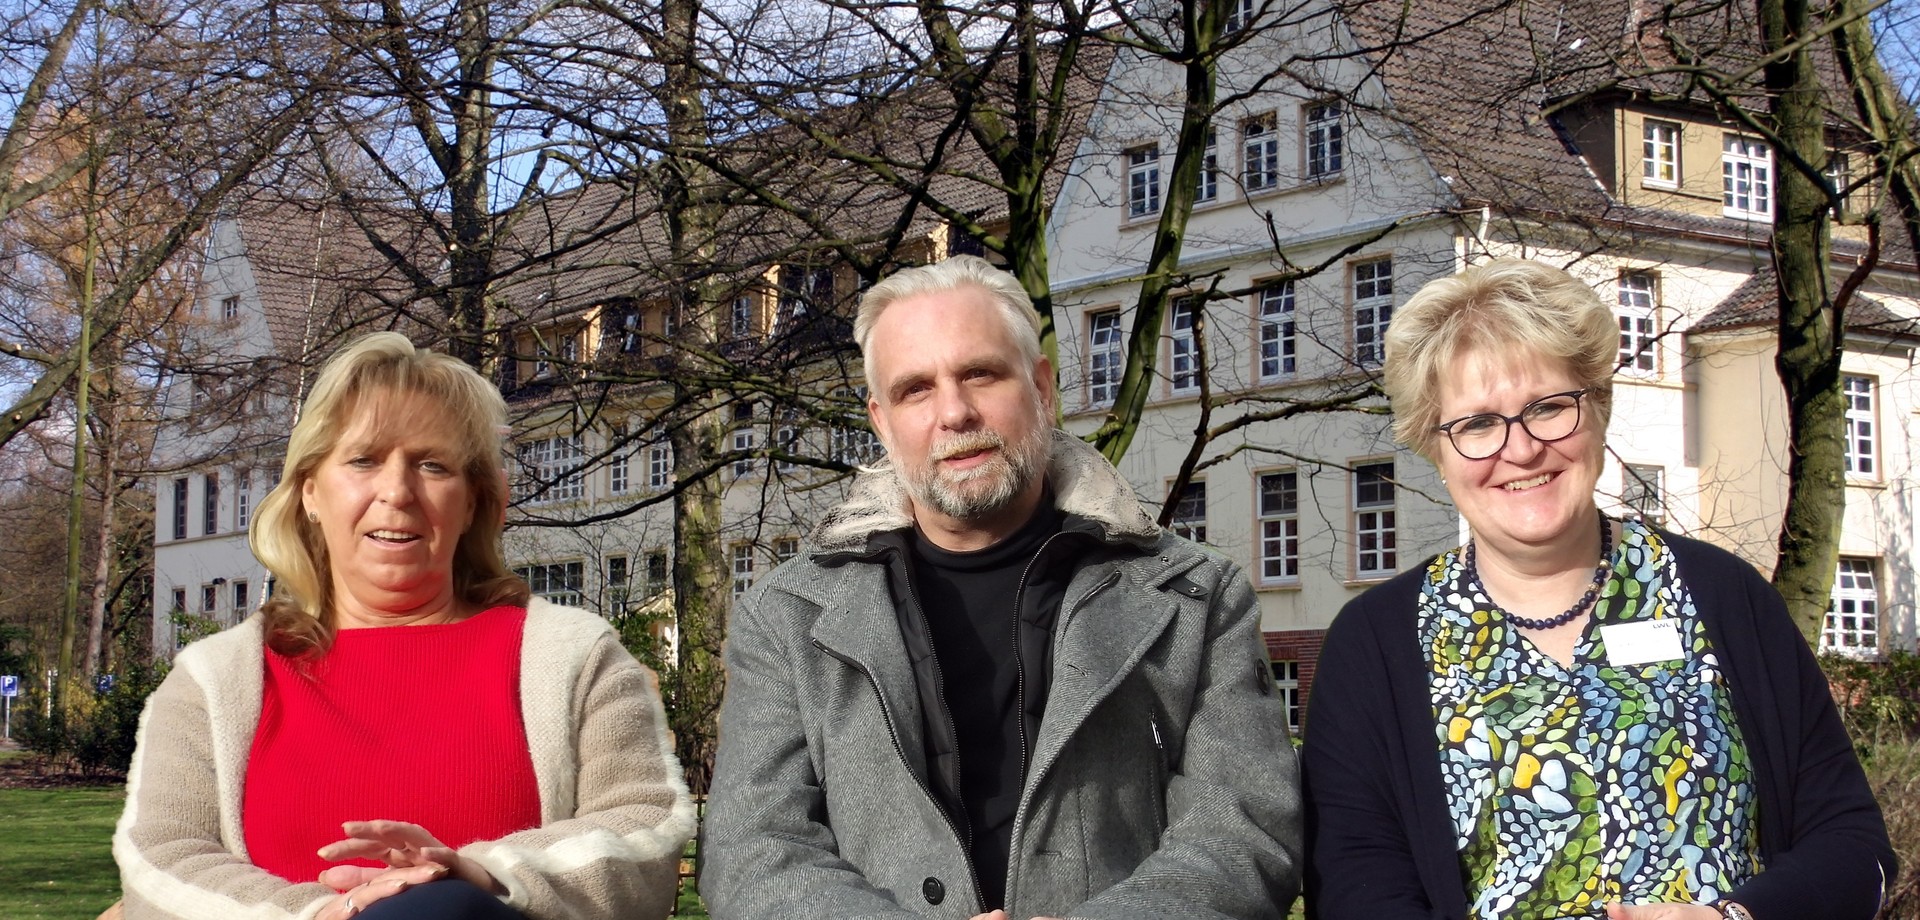 Andrea Gutwed, Martin Klingbeil und Kerstin Ebert vor dem Rosenberg-Haus